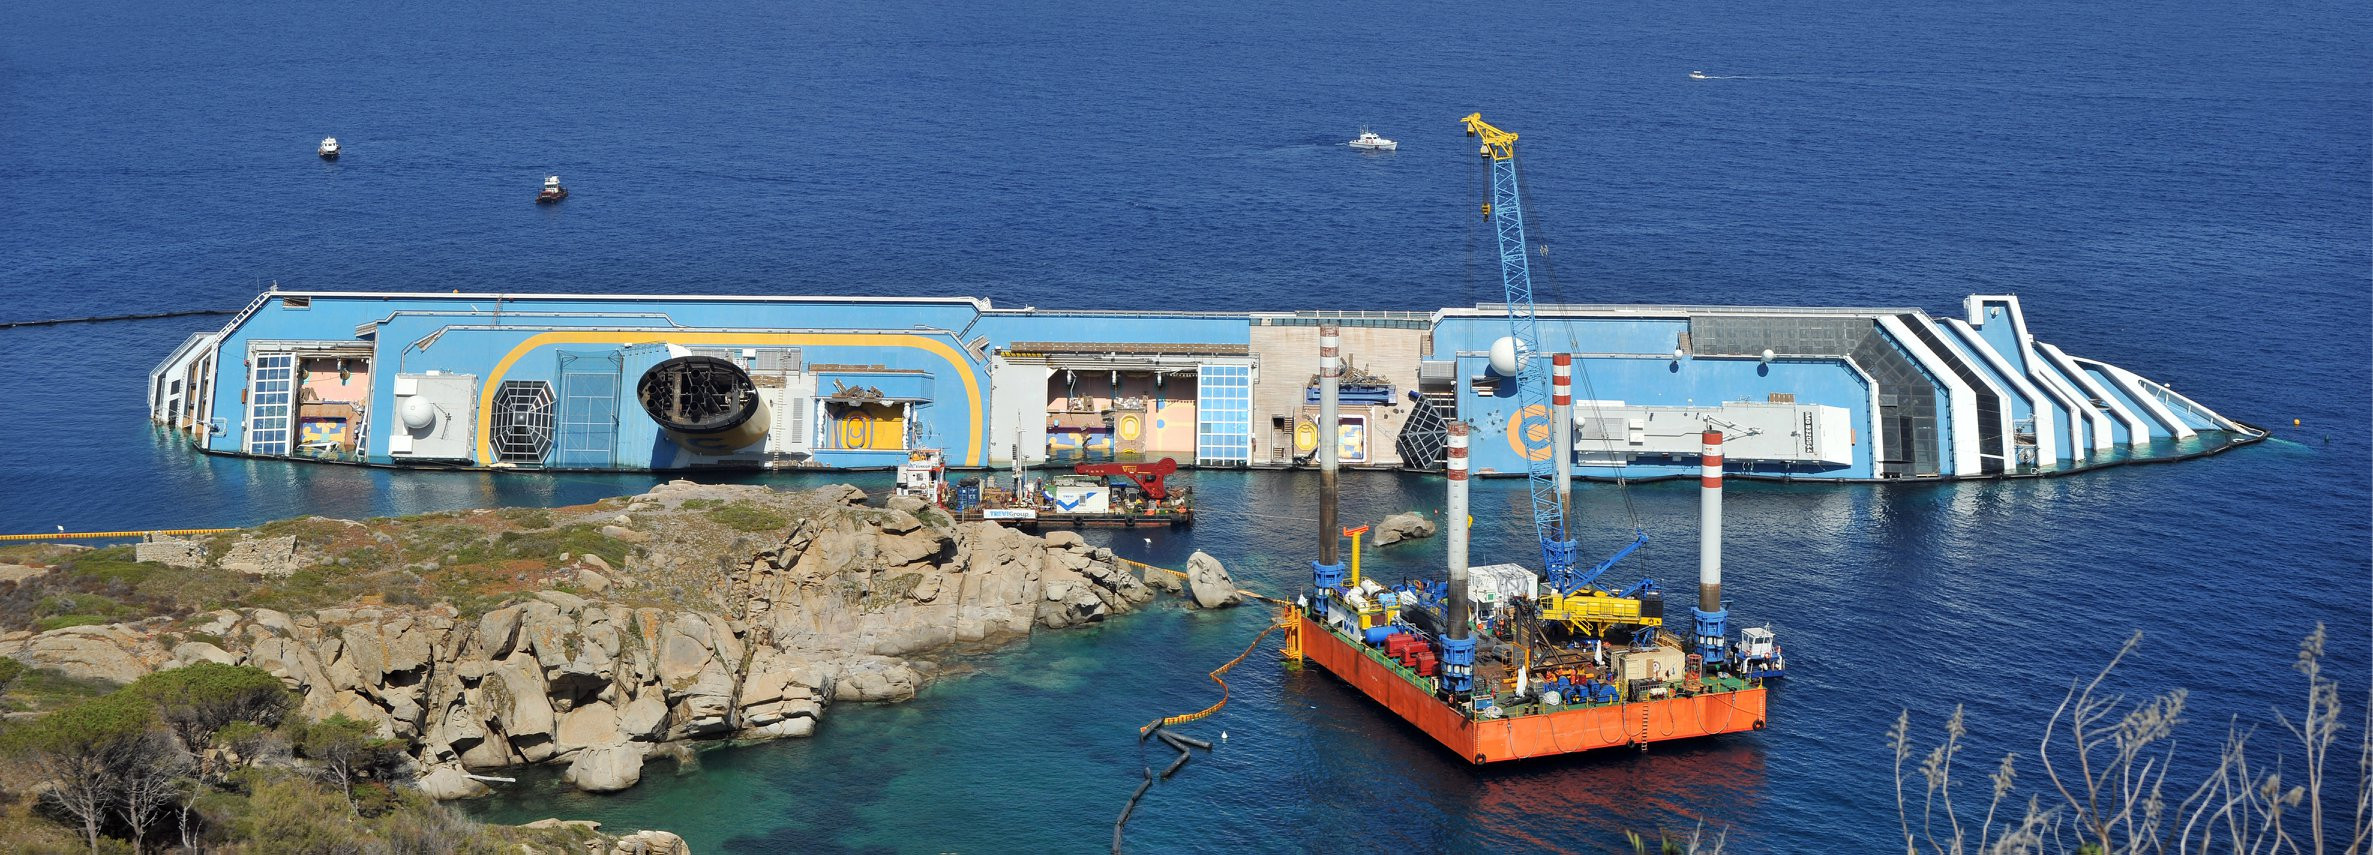 Costa Concordia Gemi Enkaz Kurtarma Operasyonu